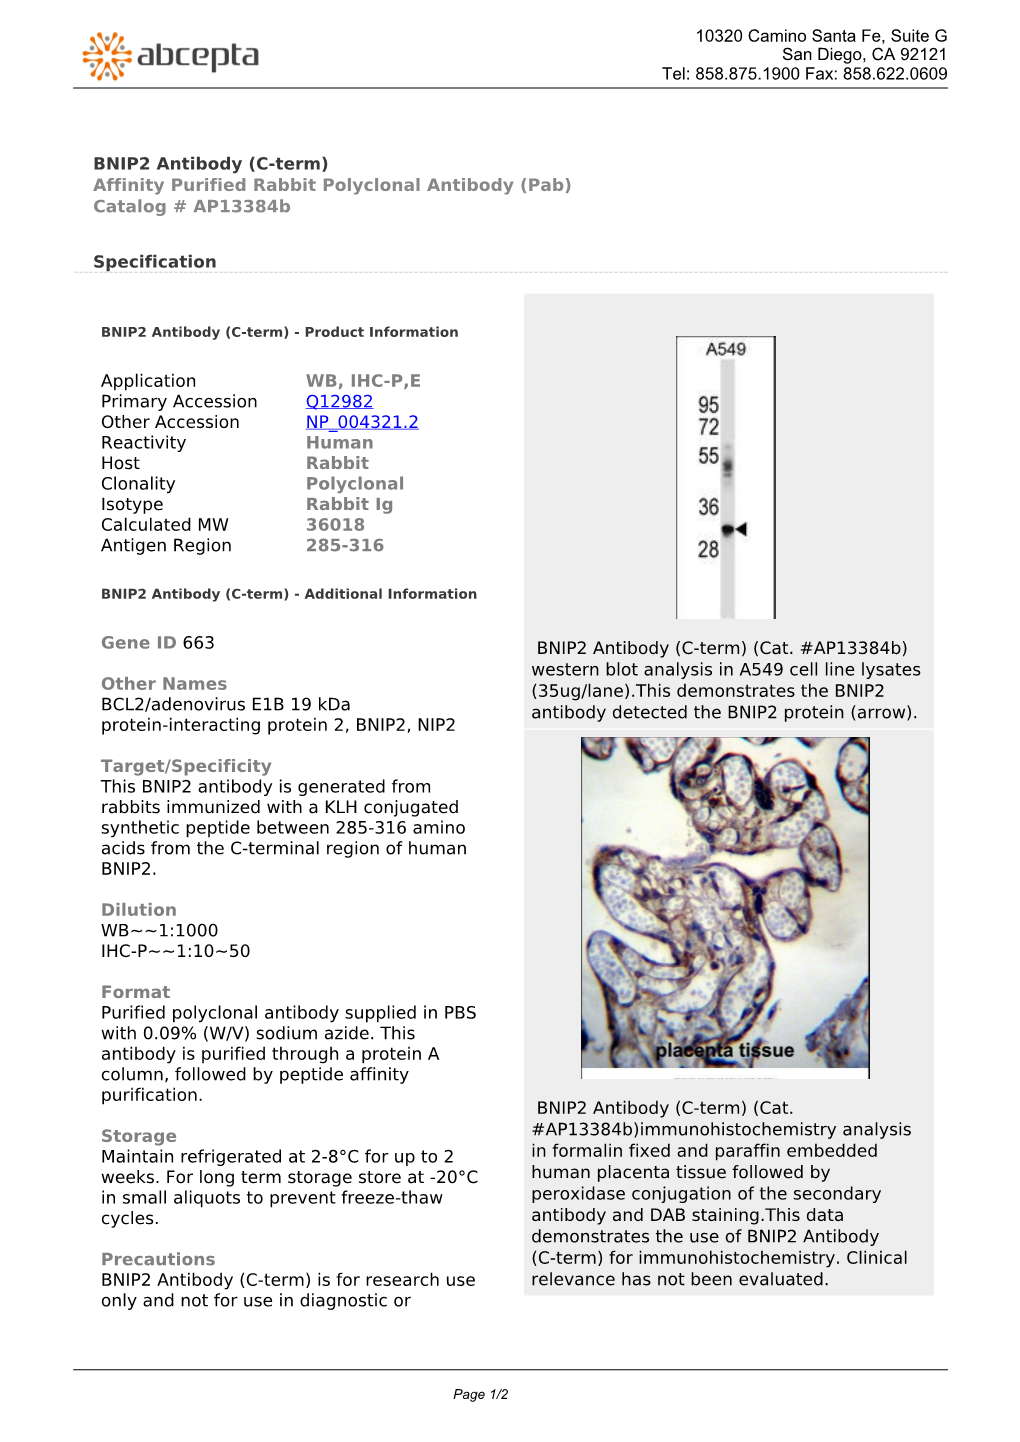 BNIP2 Antibody (C-Term) Affinity Purified Rabbit Polyclonal Antibody (Pab) Catalog # Ap13384b